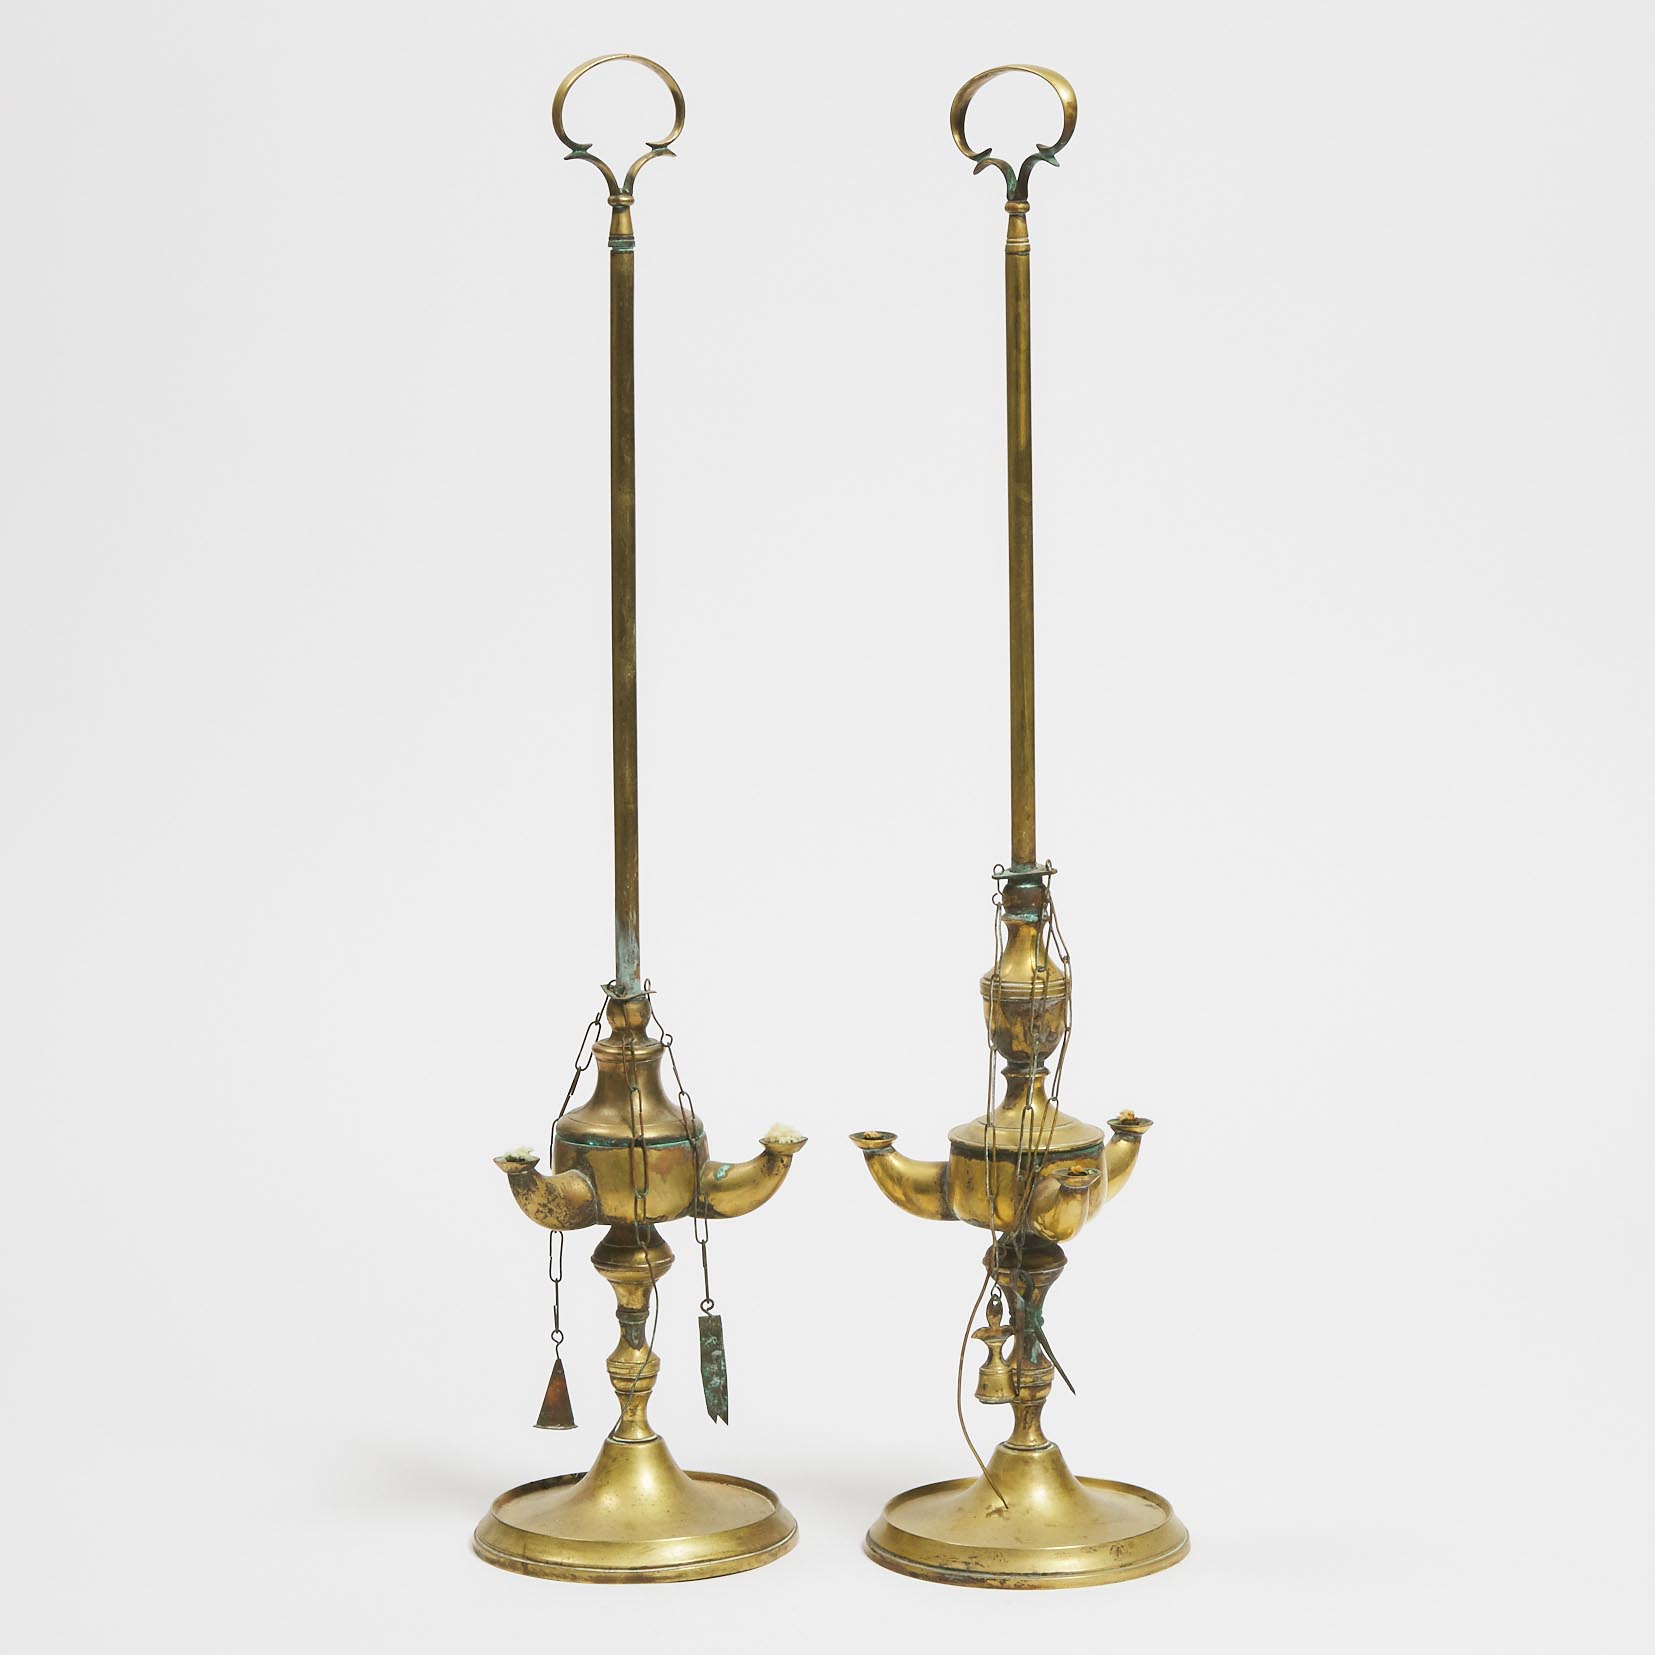 Pair of Florentine Brass Oil Lamps, 19th century